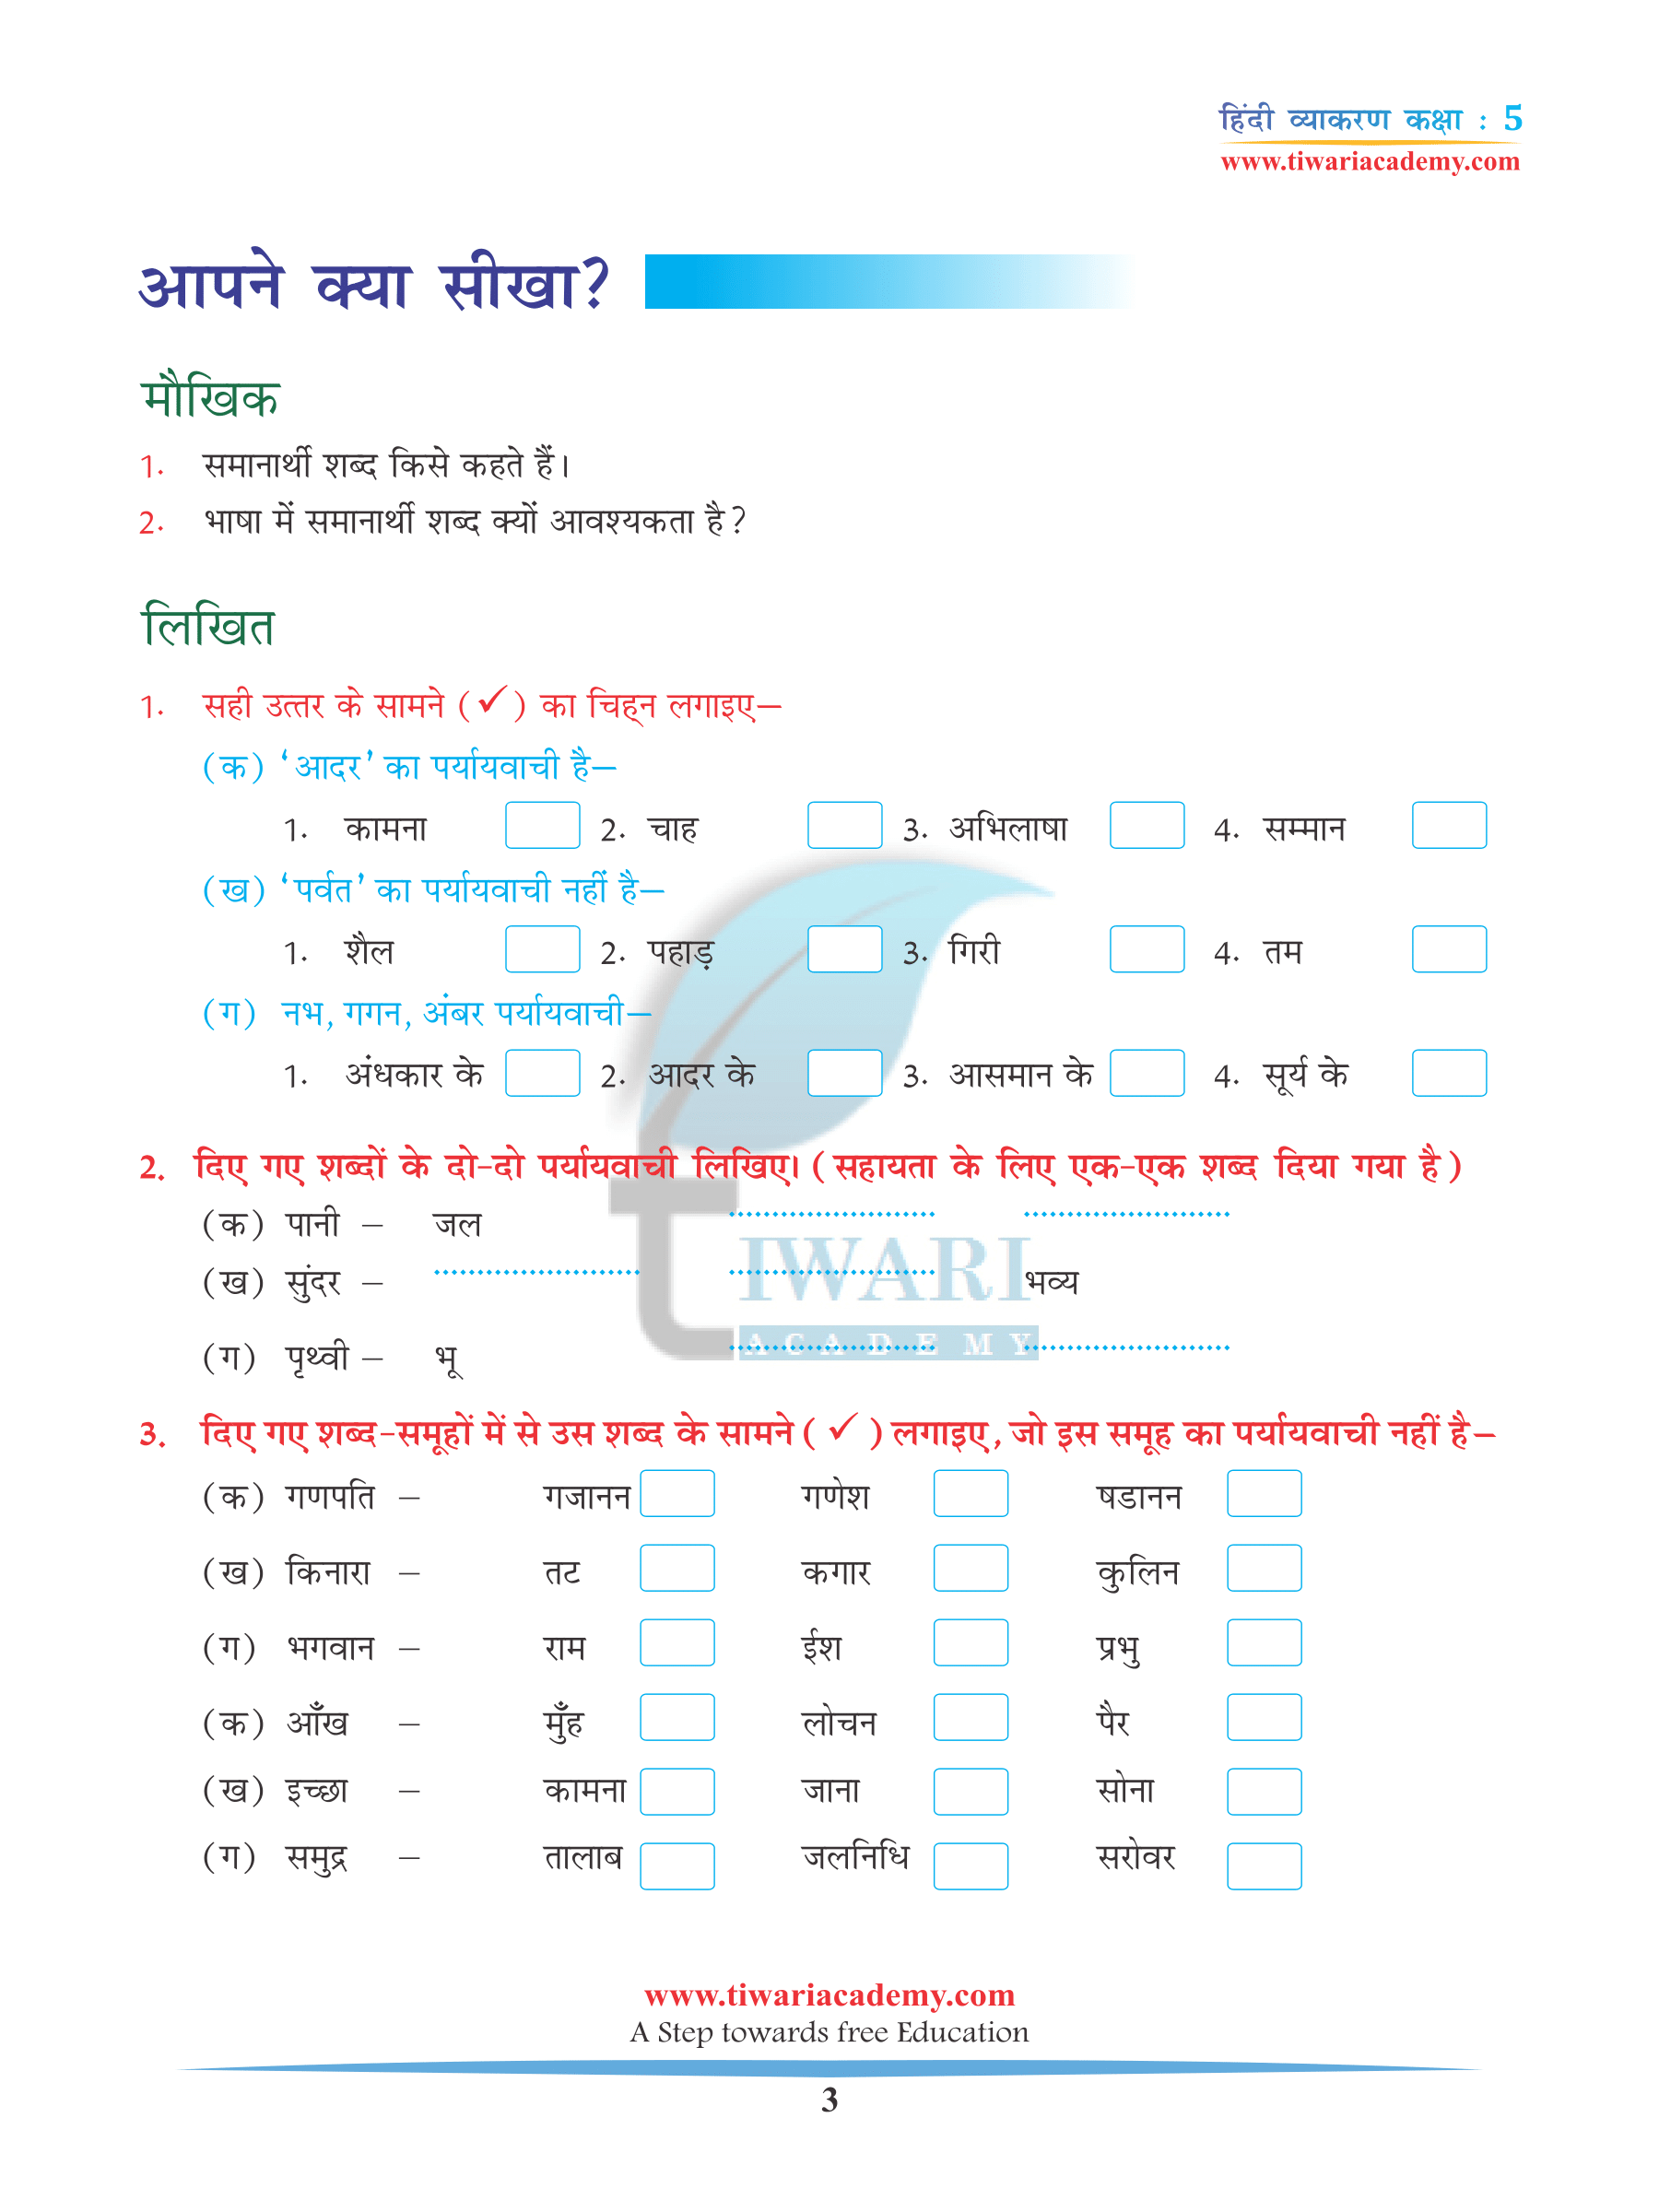 CBSE Class 5 Hindi Vyakaran Chapter 13 Paryayvachi Shabd for up board